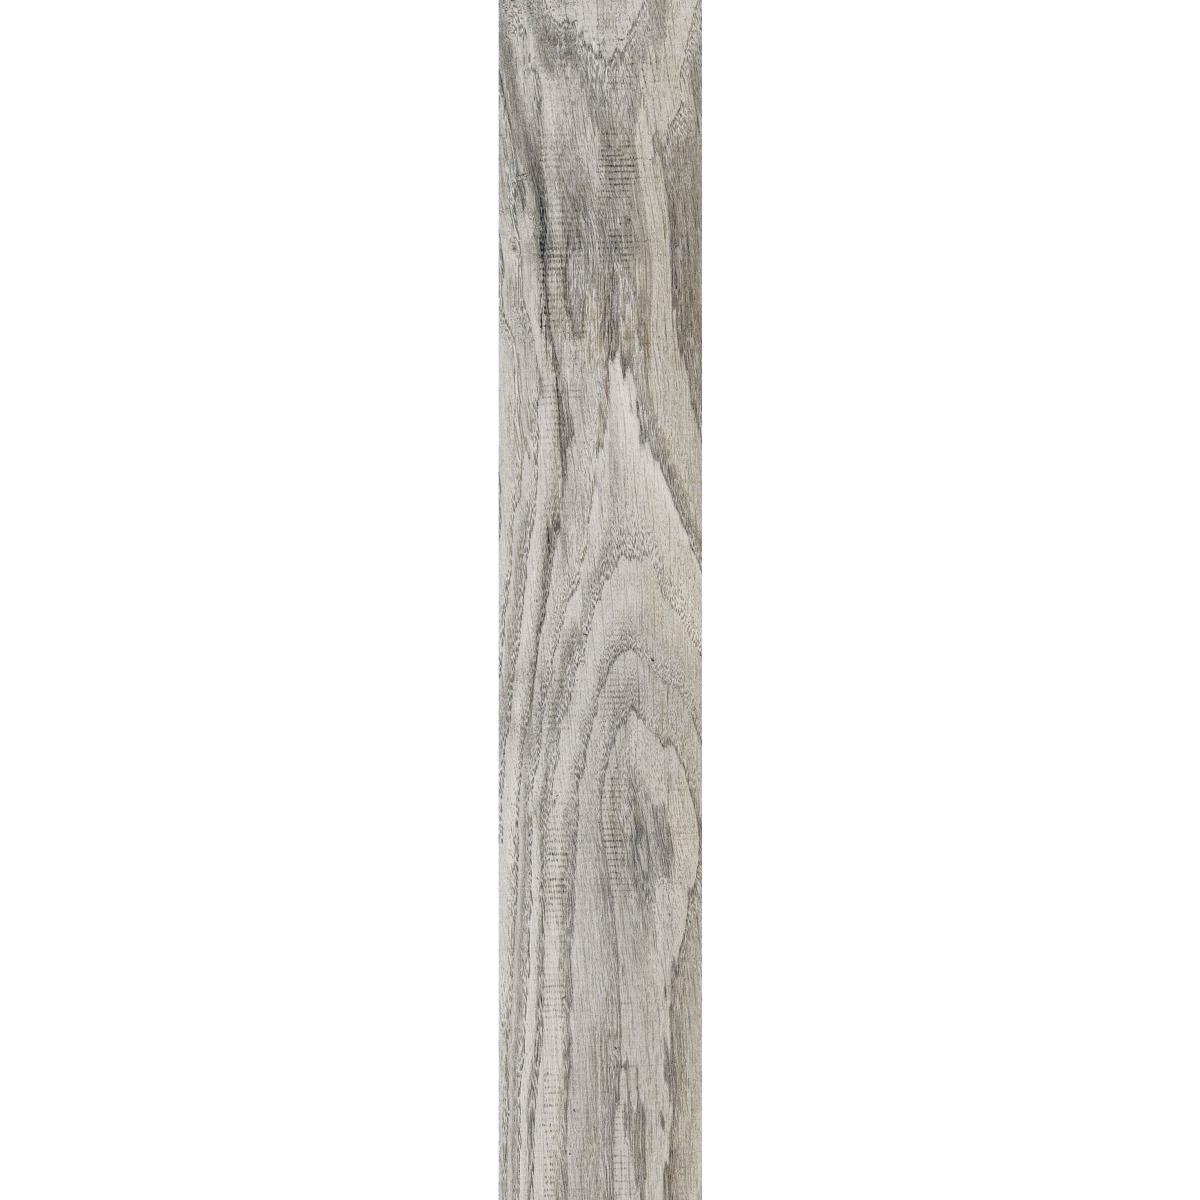 Rondine Living Tortora Wood Effect Porcelain Tile 7.5x45cm